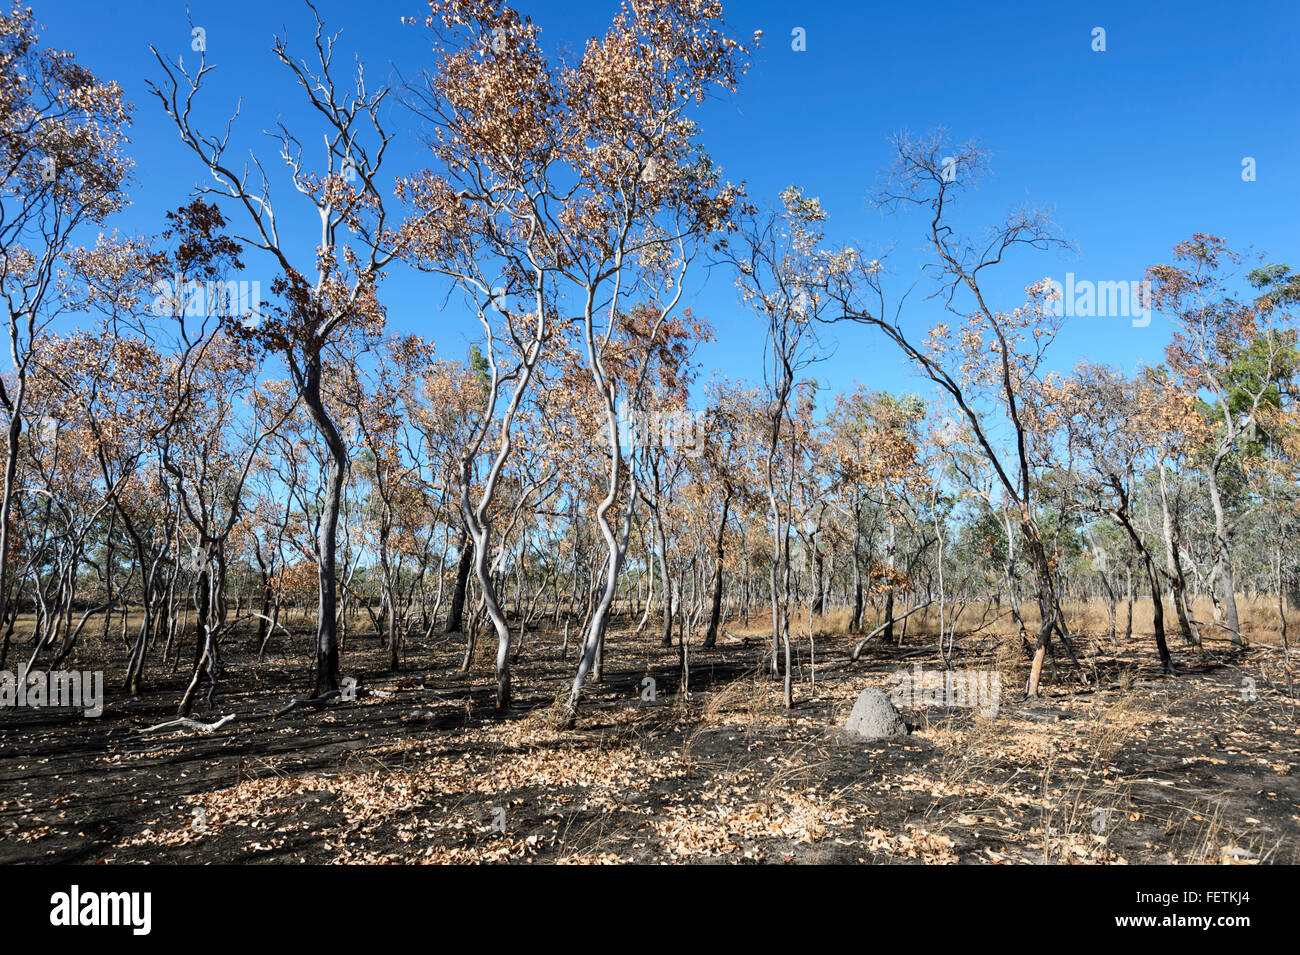 Dommages de brousse, savane du Golfe, Queensland, Queensland, Australie Banque D'Images